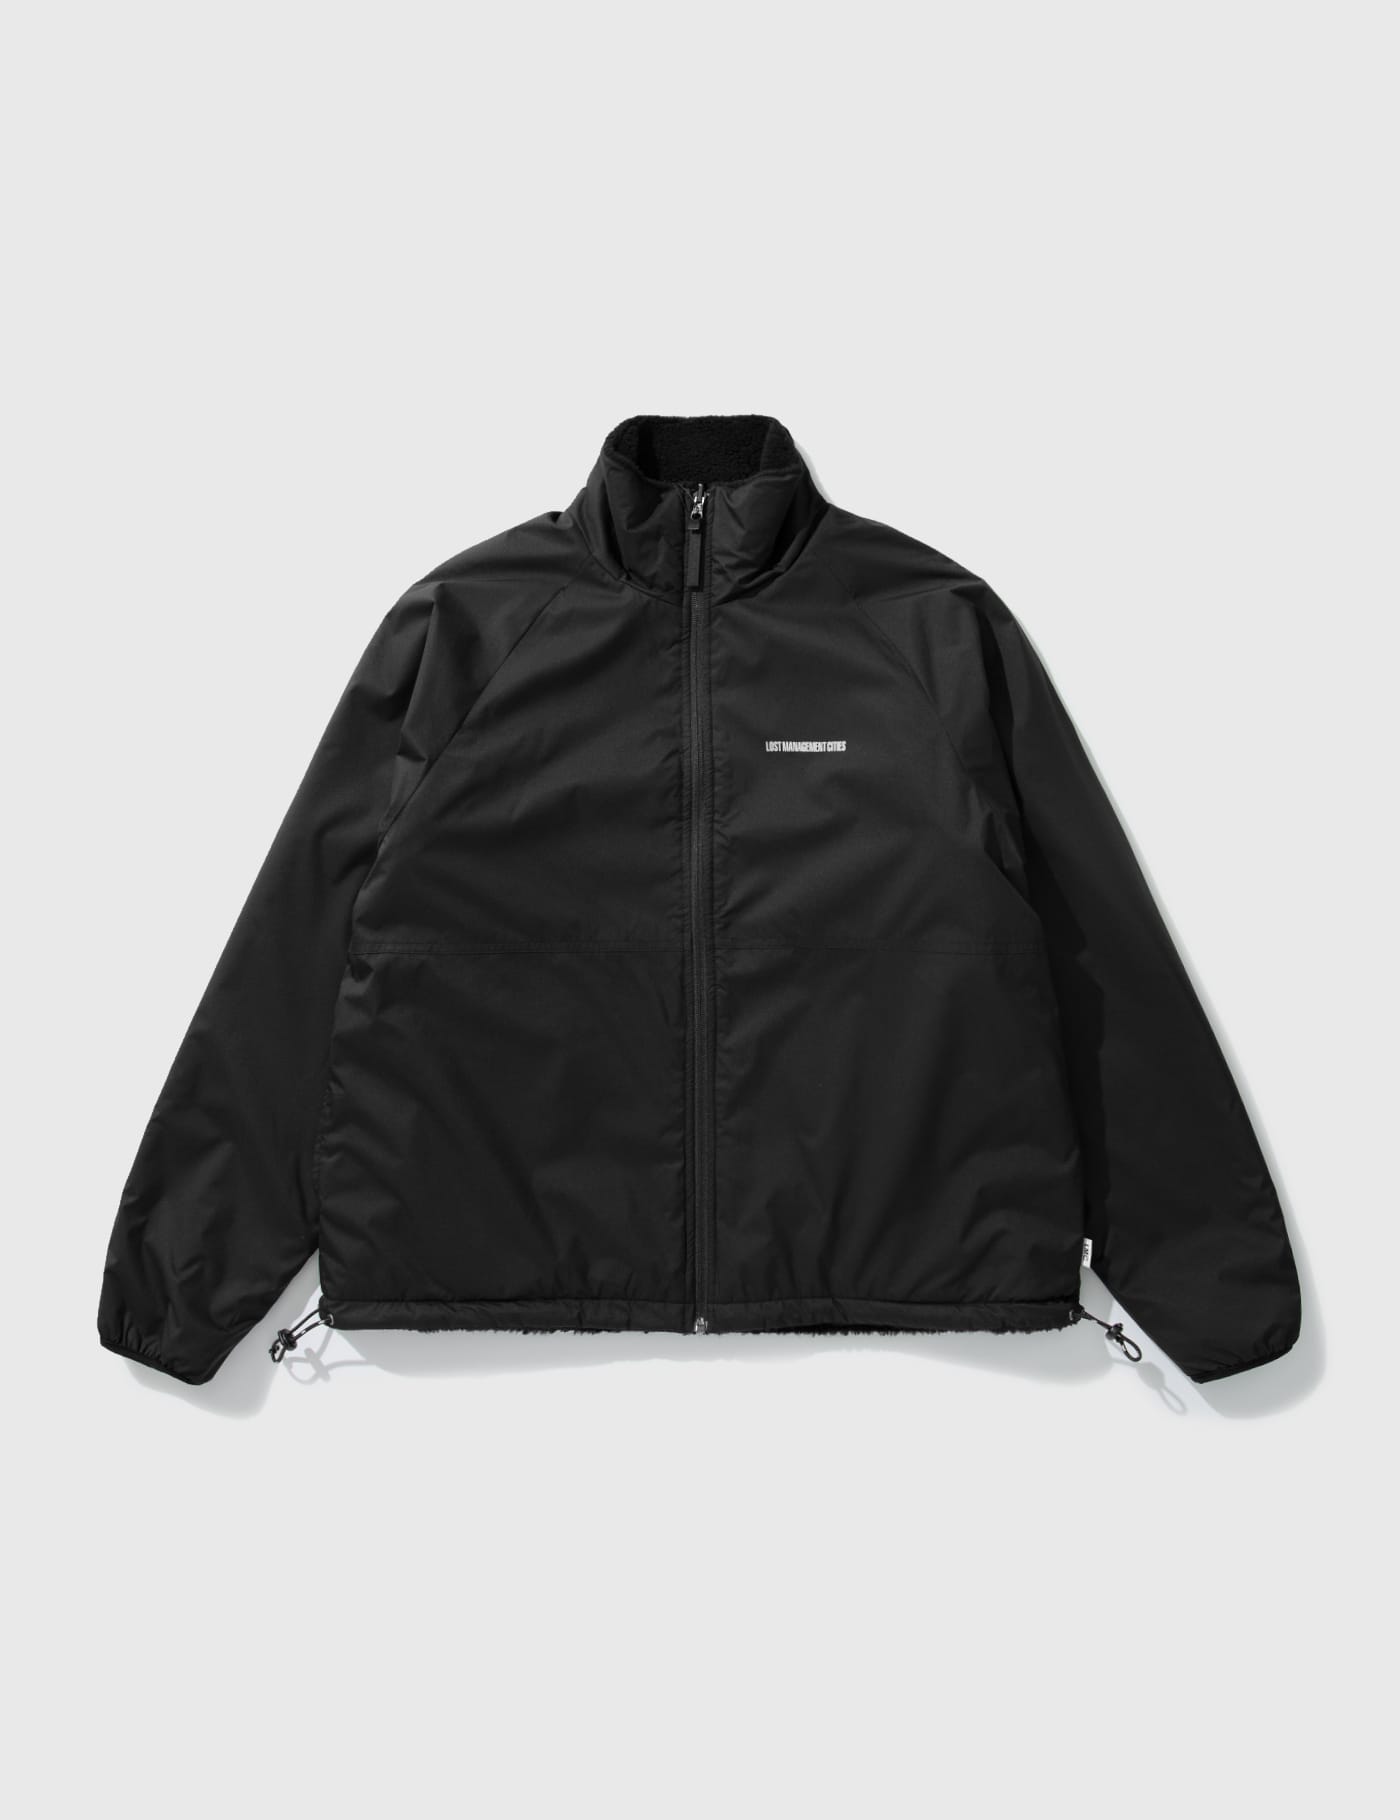 LMC - Fleece Reversible Wp Jacket | HBX - Globally Curated Fashion 